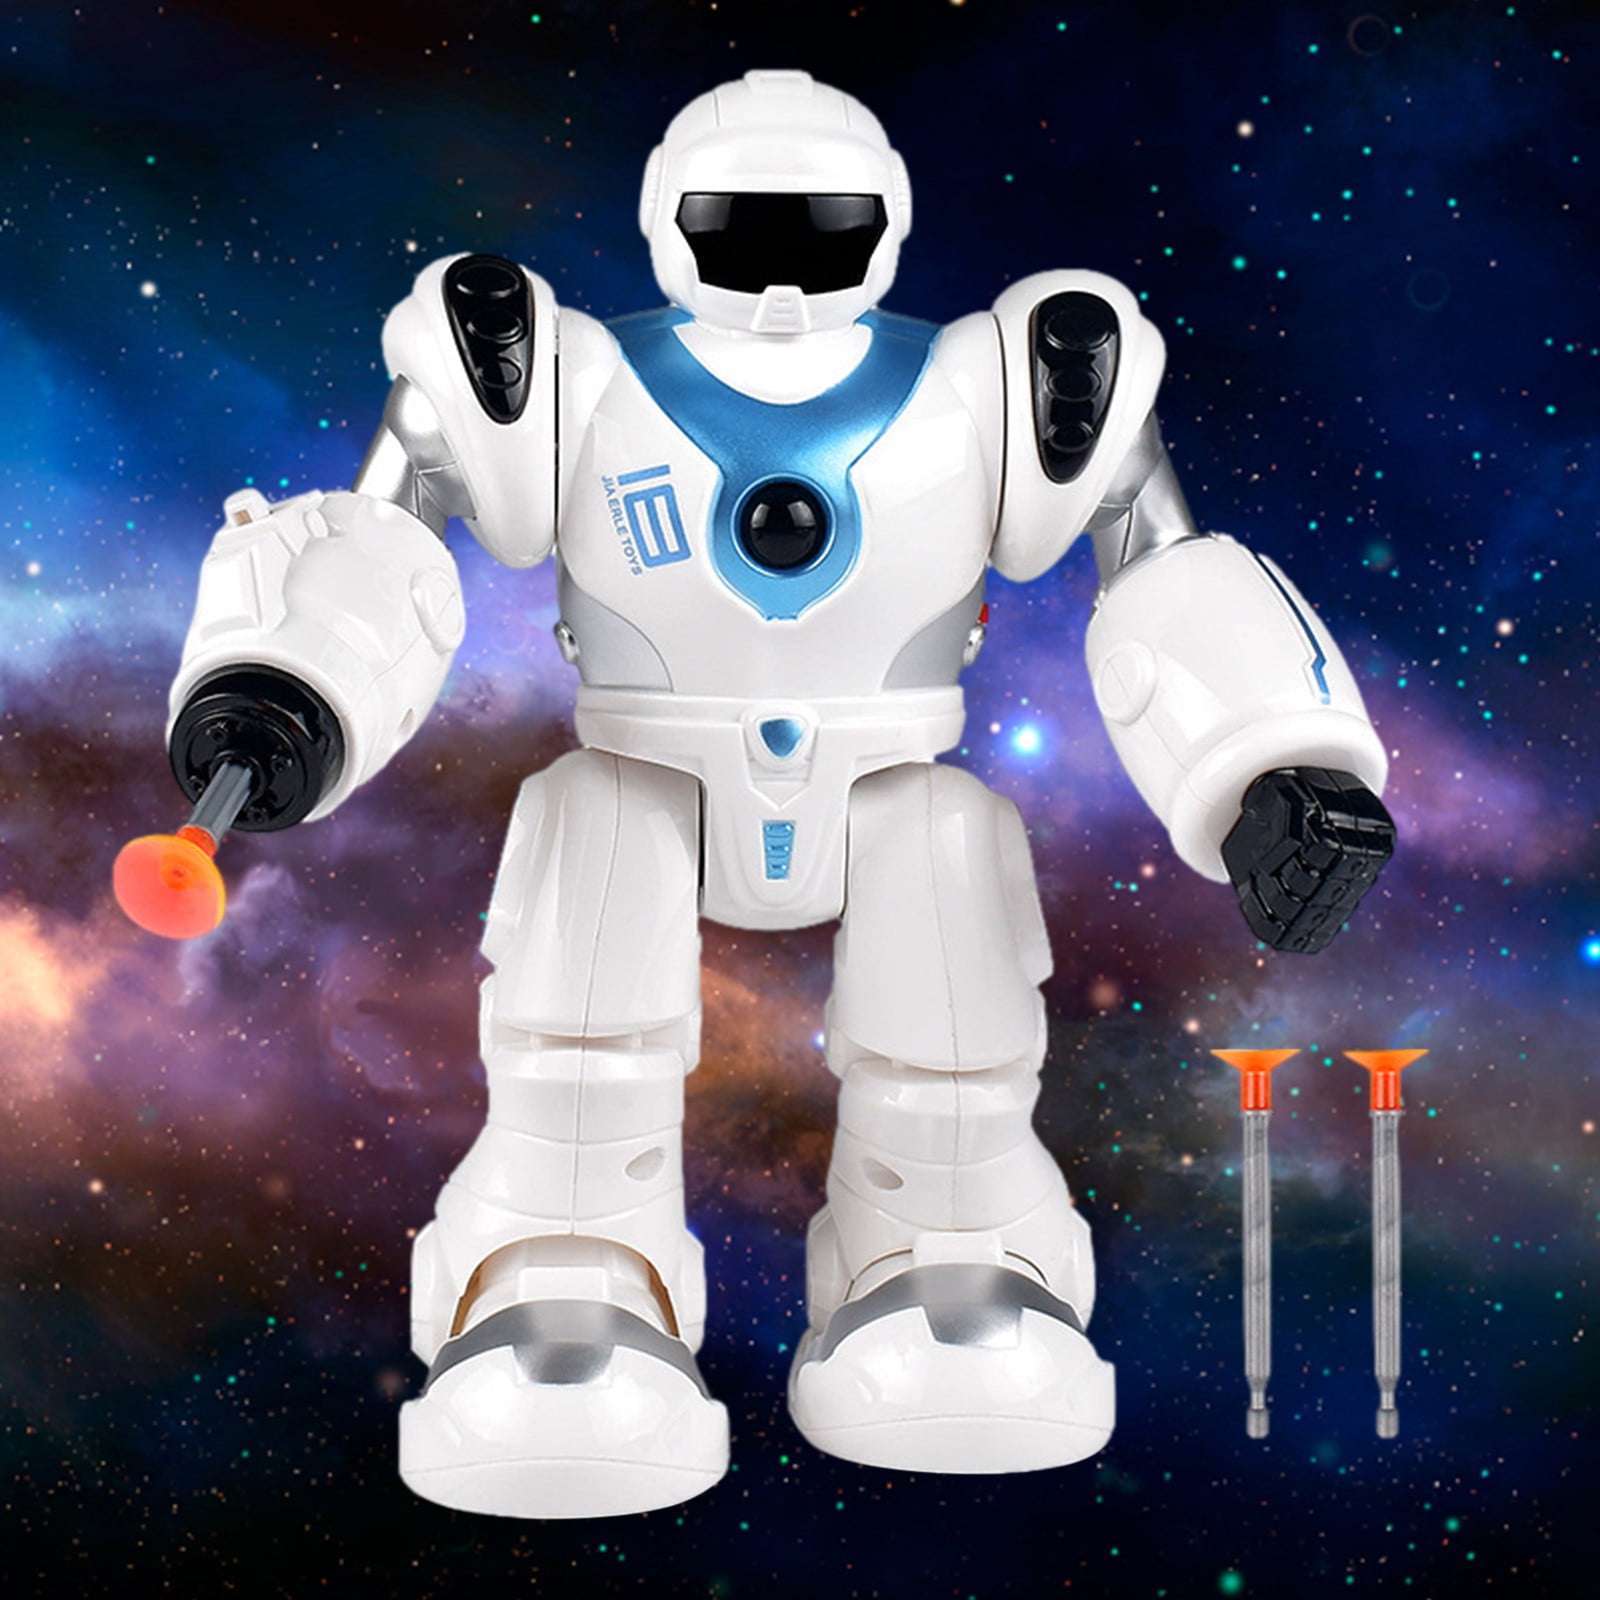 Lexibook POWERMAN Max Educational Robot with Remote Control